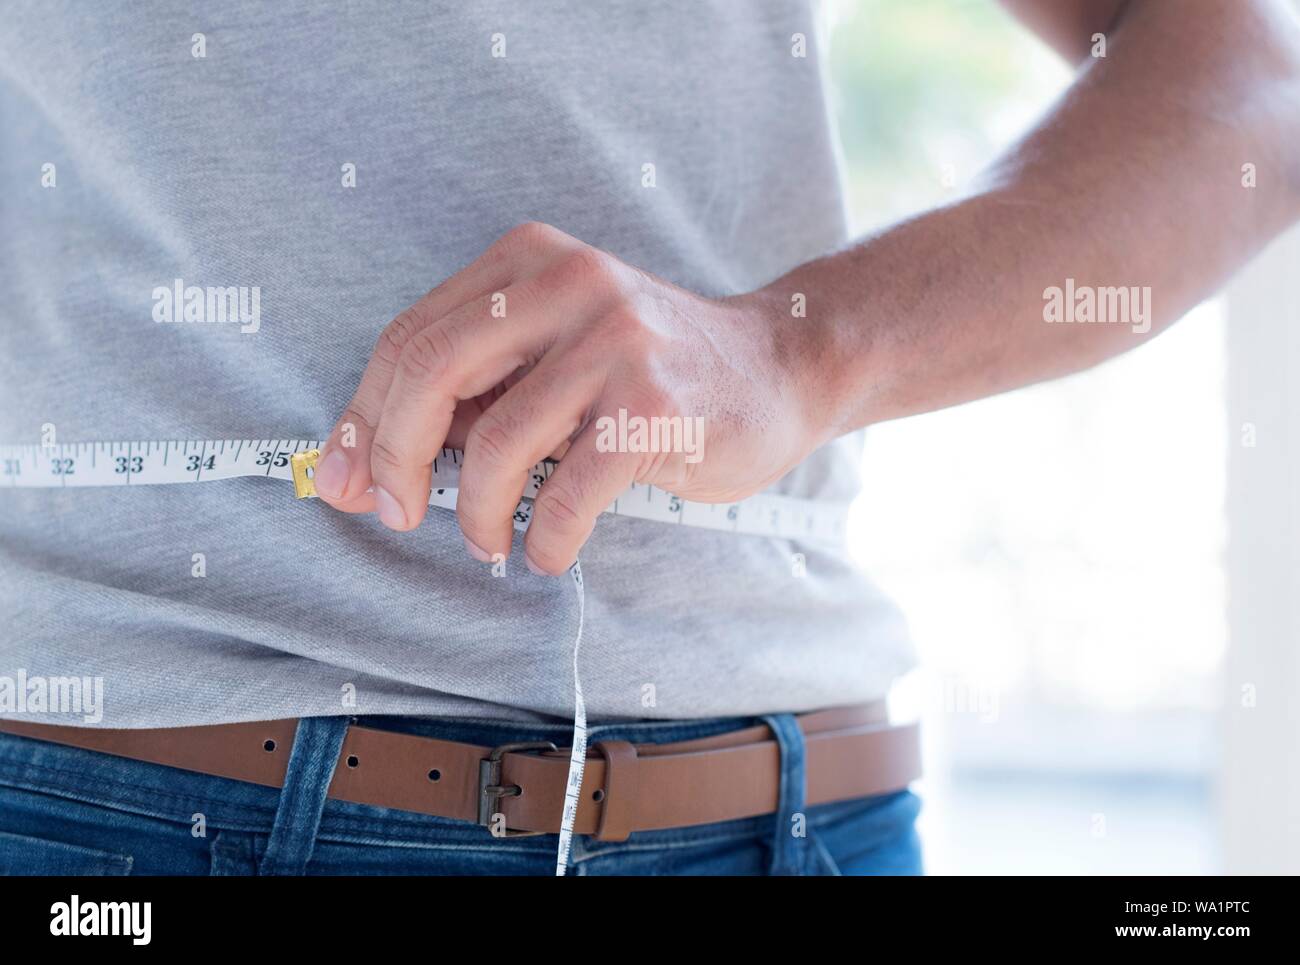 Man measuring waist. Stock Photo